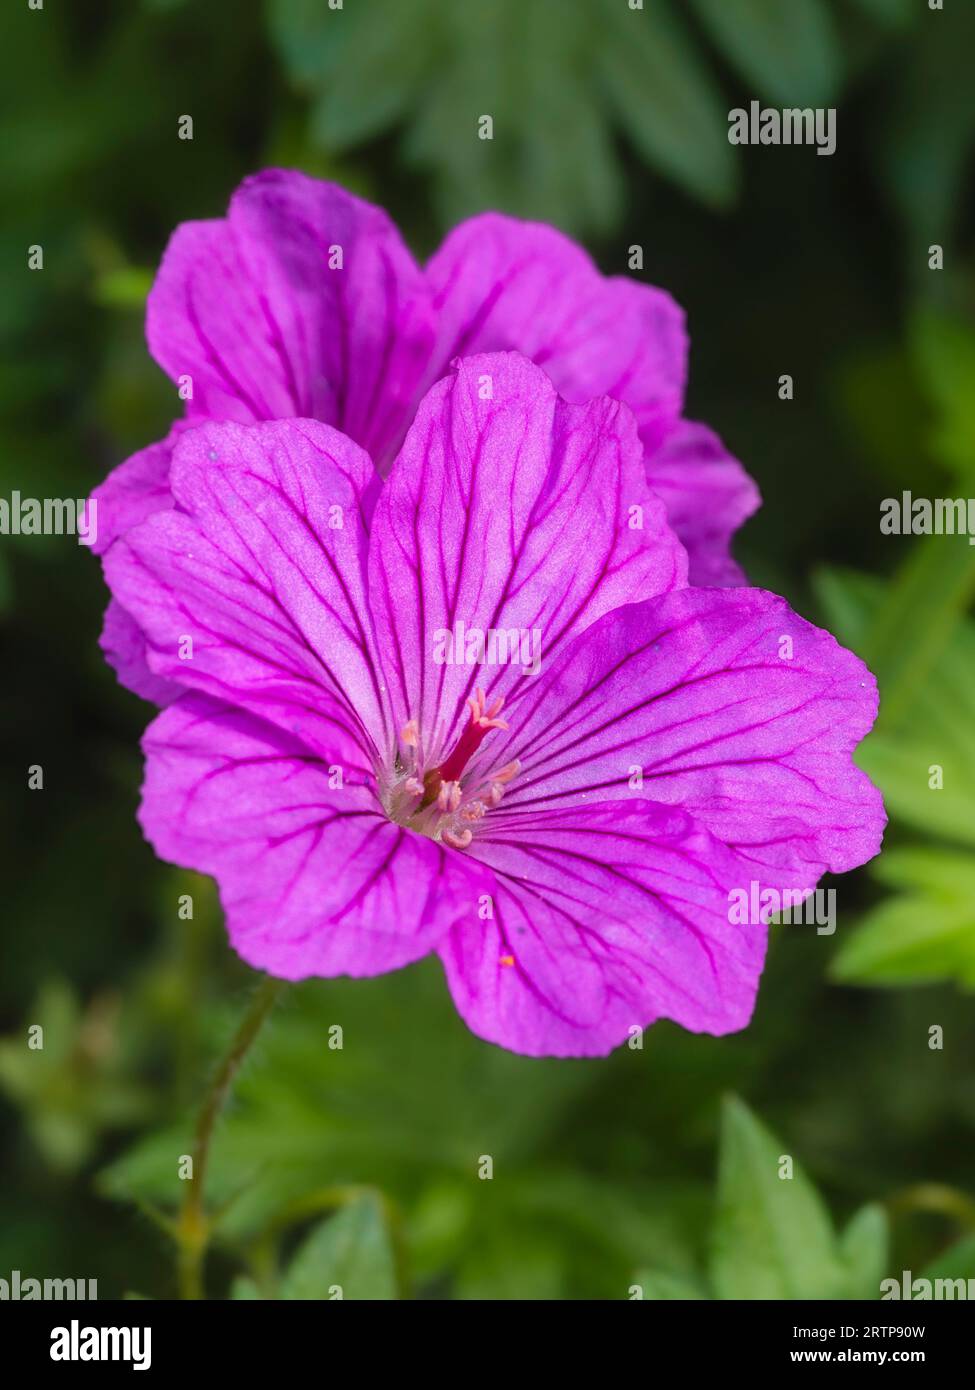 Pink flower of the long blooming hardy perennial geranium, Geranium sanguineum 'Tiny Monster' Stock Photo